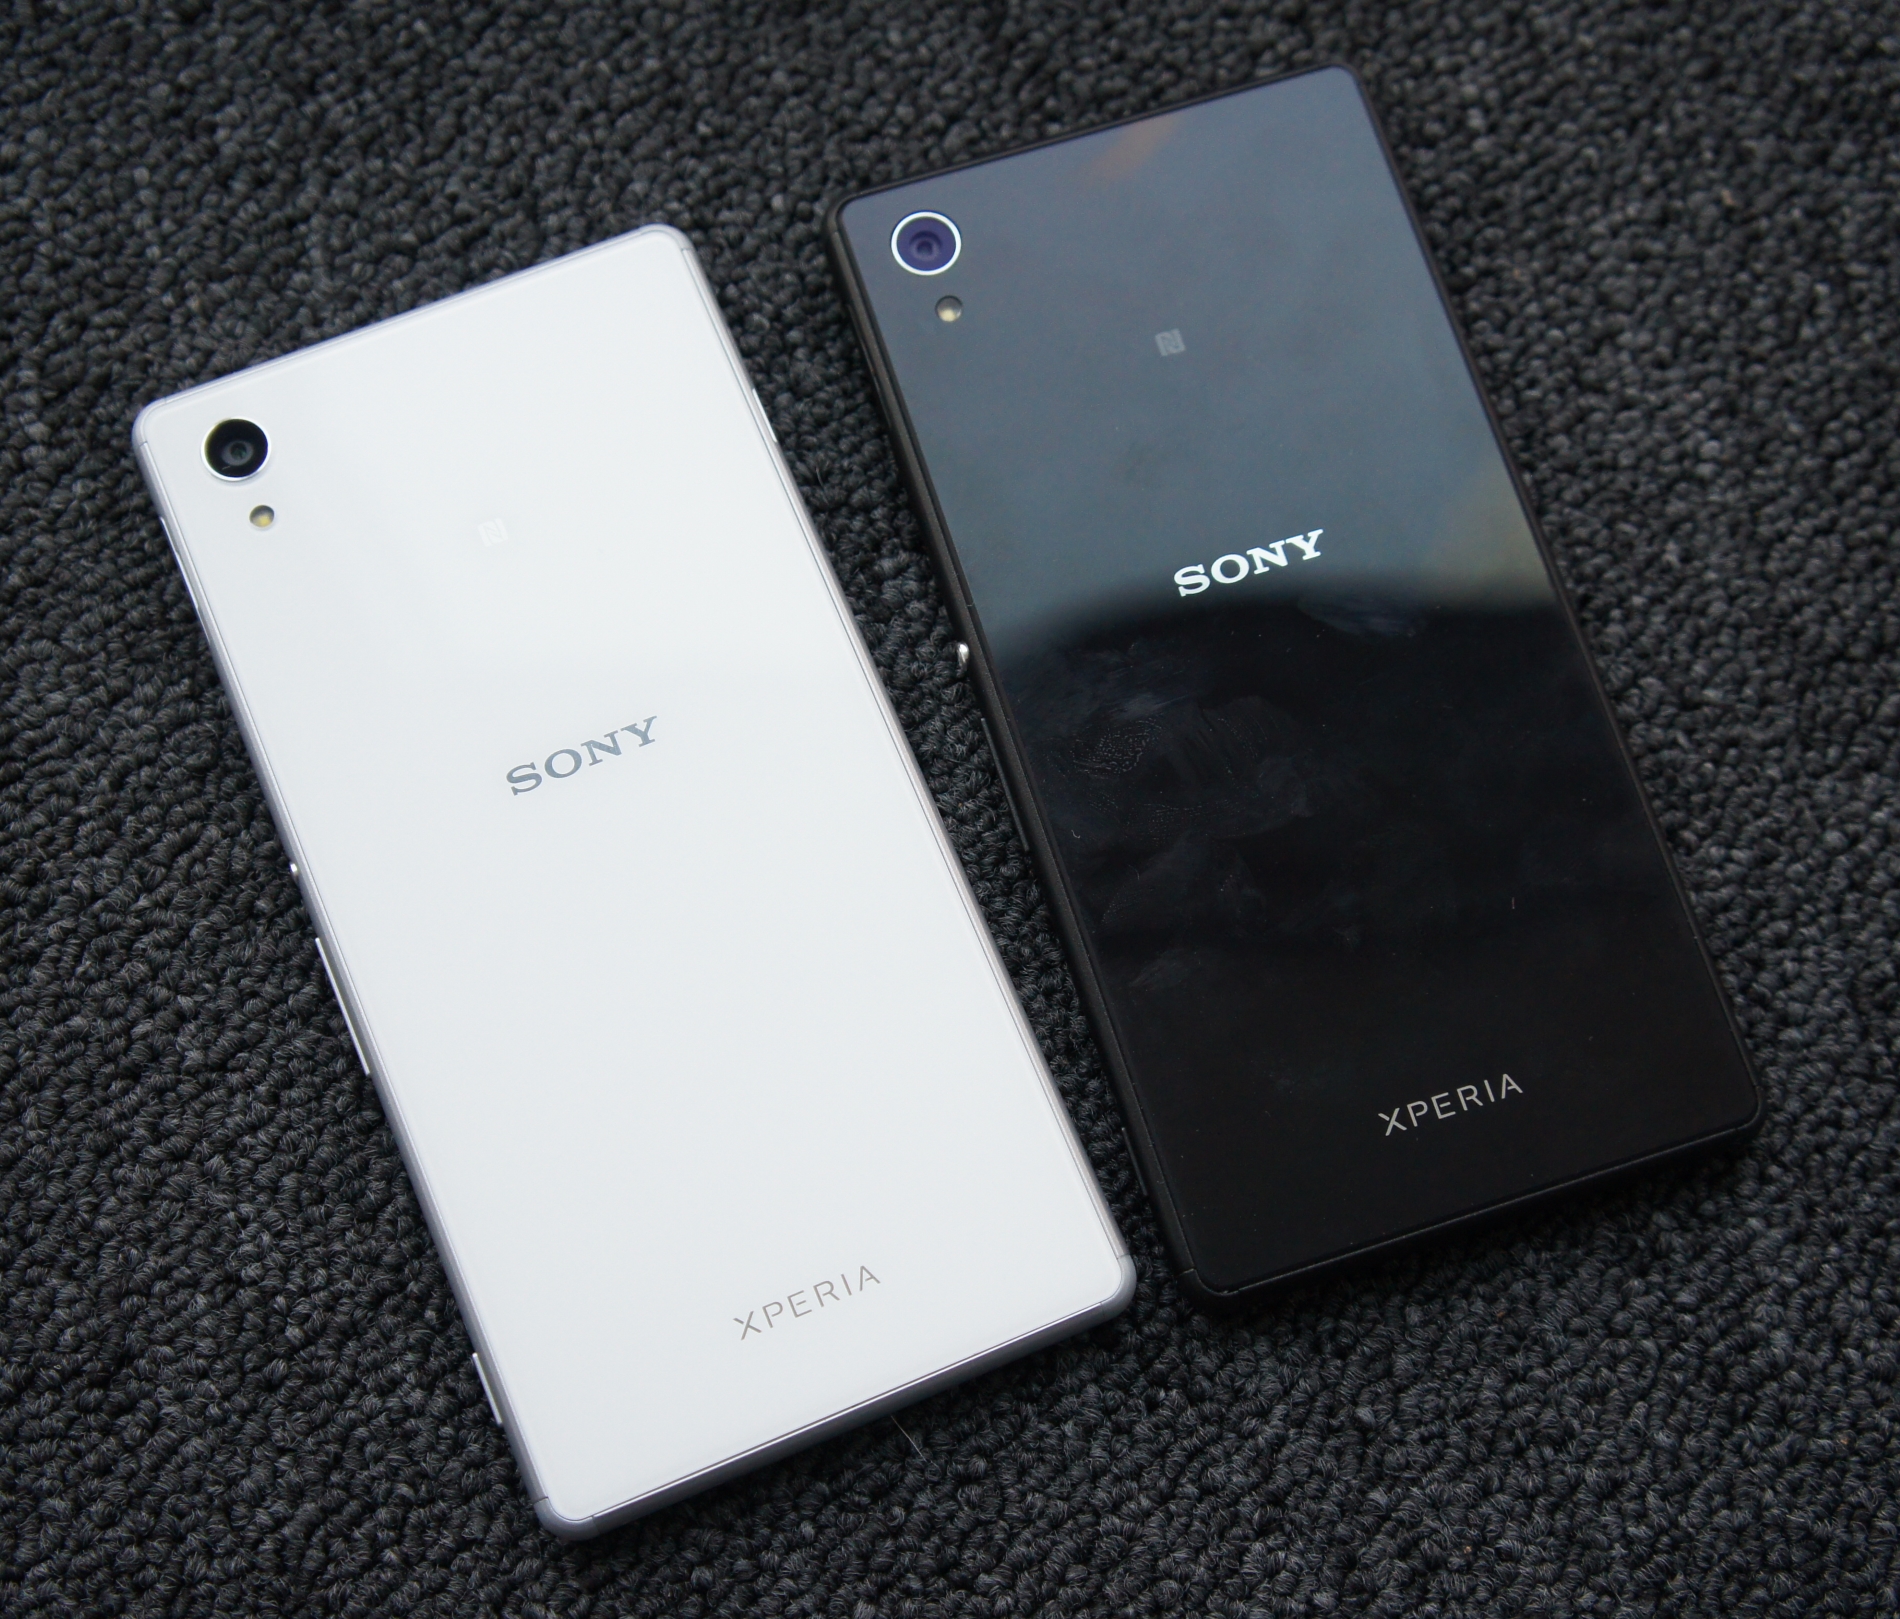 Xperia m4 aqua. Sony Xperia ce0682. Сони иксперия 2015. Sony Xperia 2015 года модели. Sony Xperia 0682.